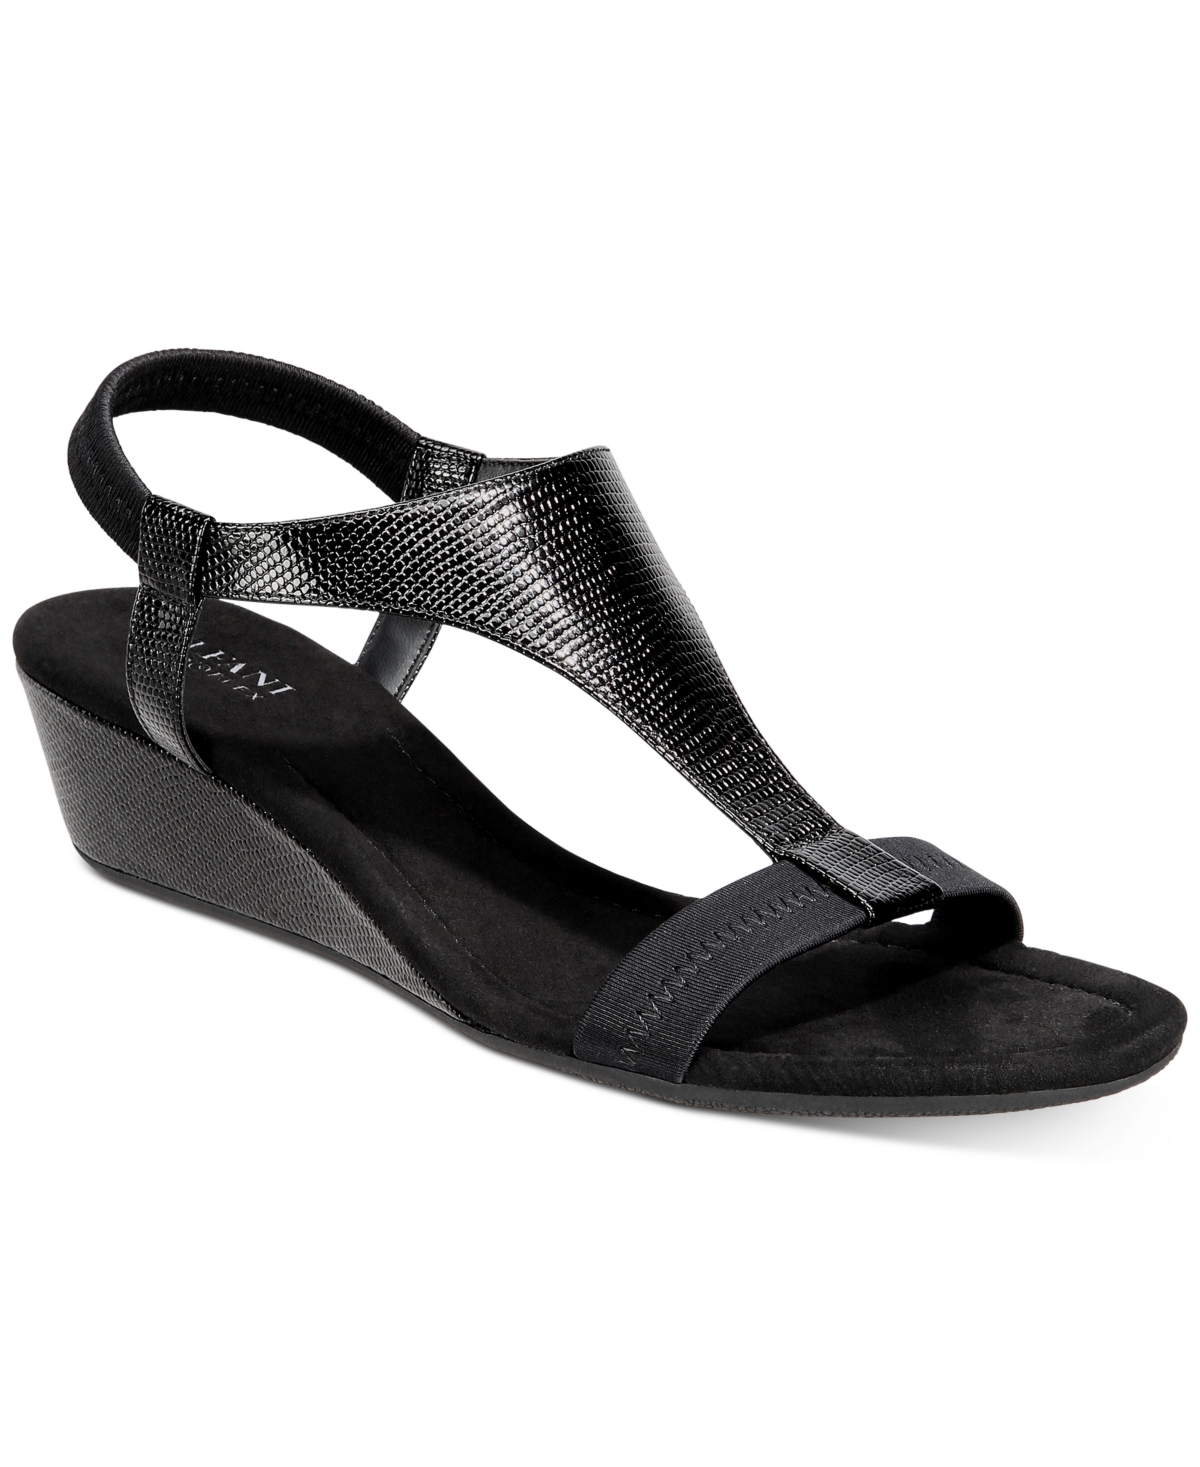 Women's Step 'N Flex Vacanzaa Wedge Sandals, Created for Macy's - Black Lizard